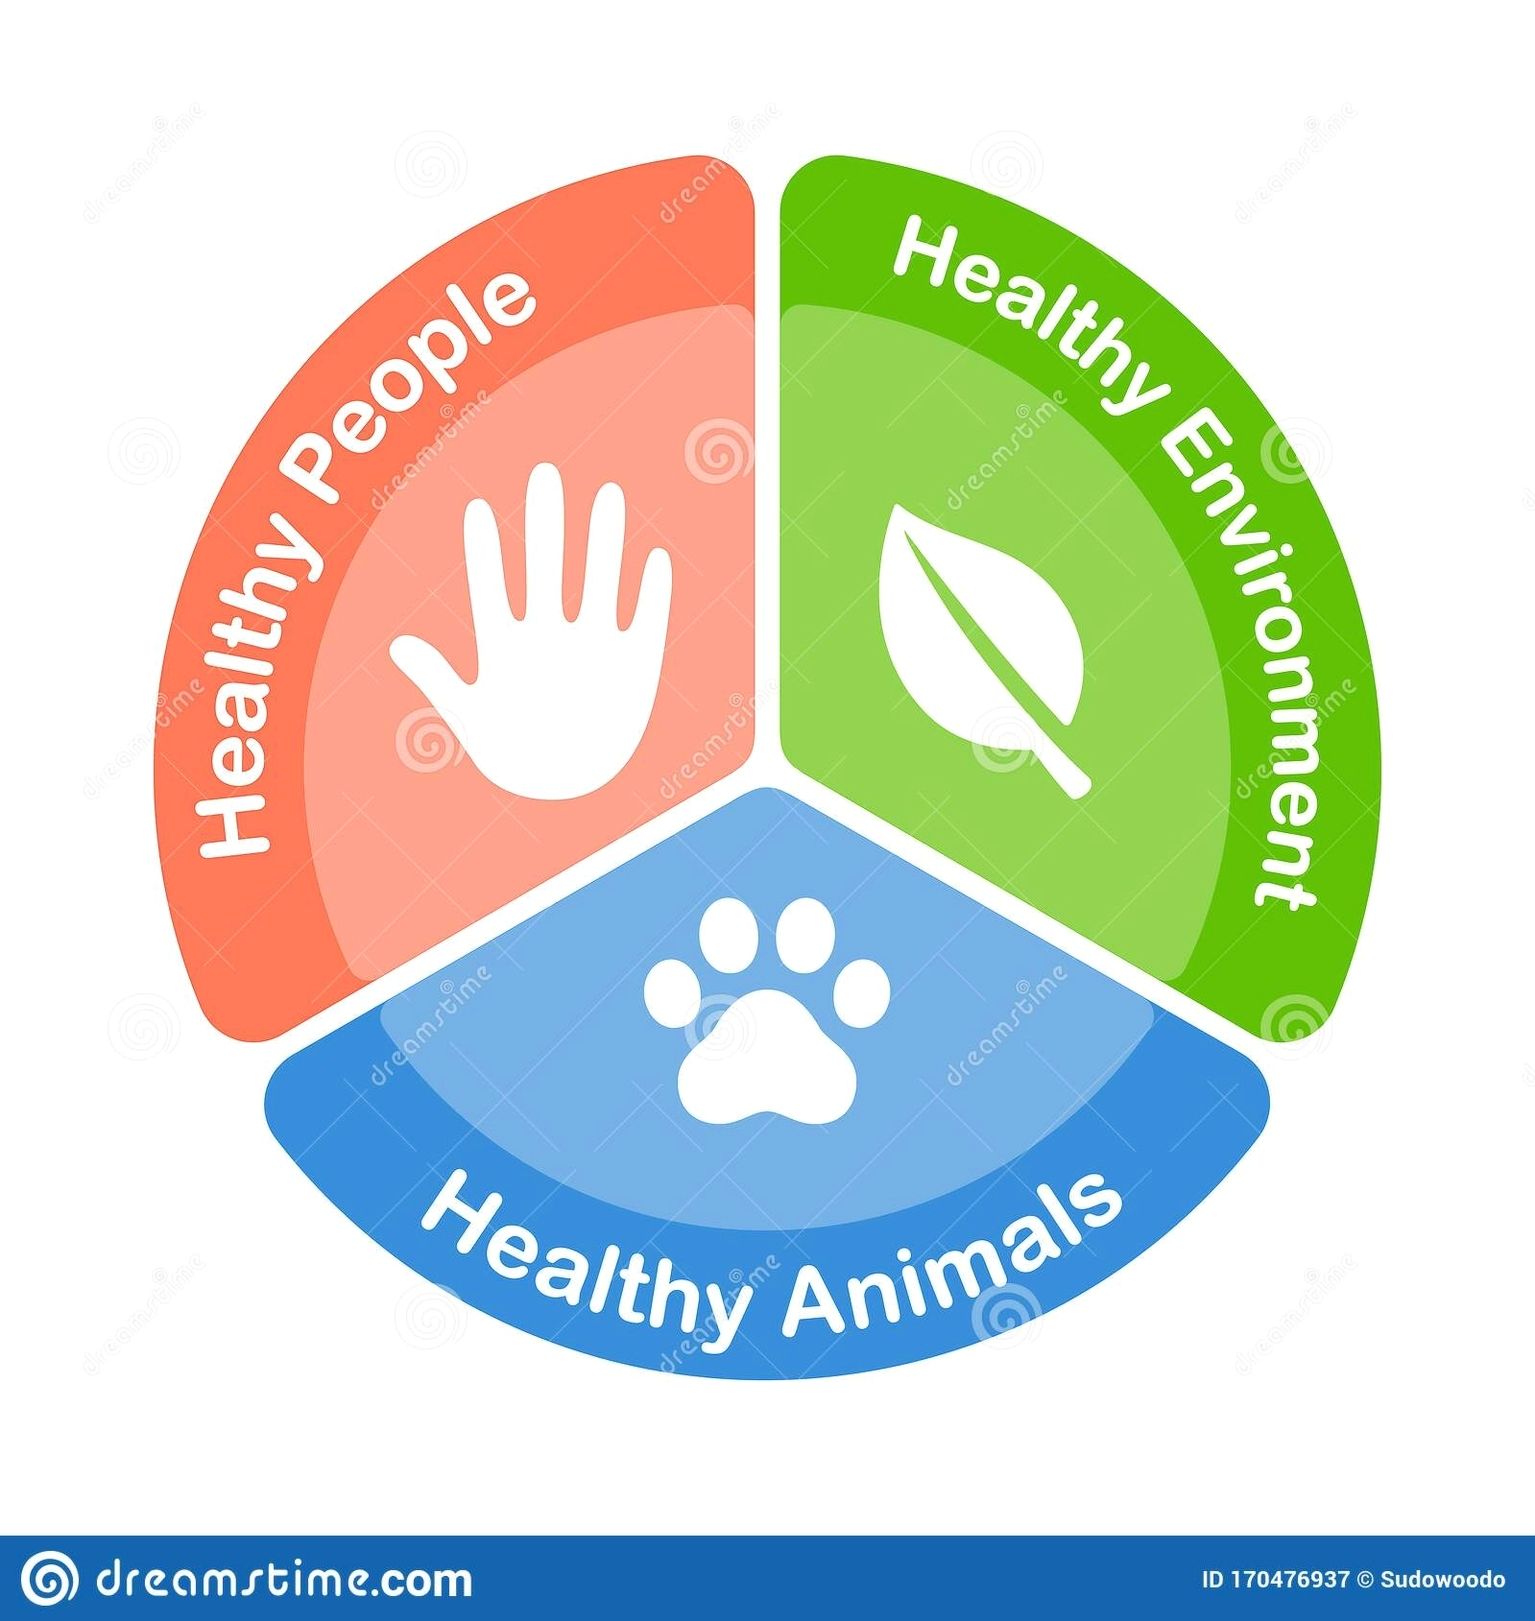 Health People Environment Animals